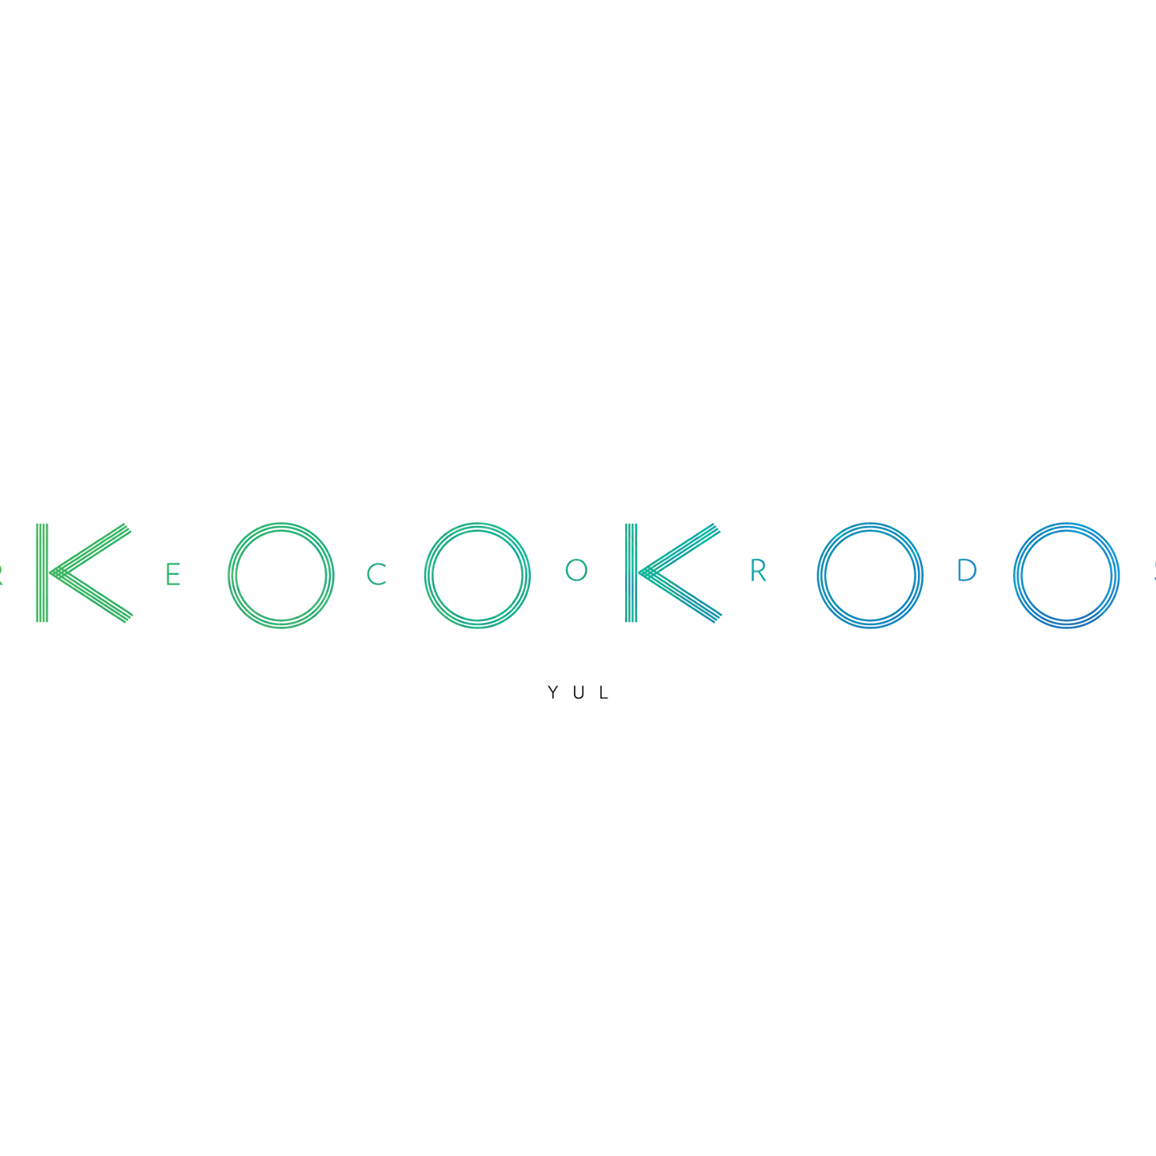 Kookoo Records (a unit of Unidisc Music)